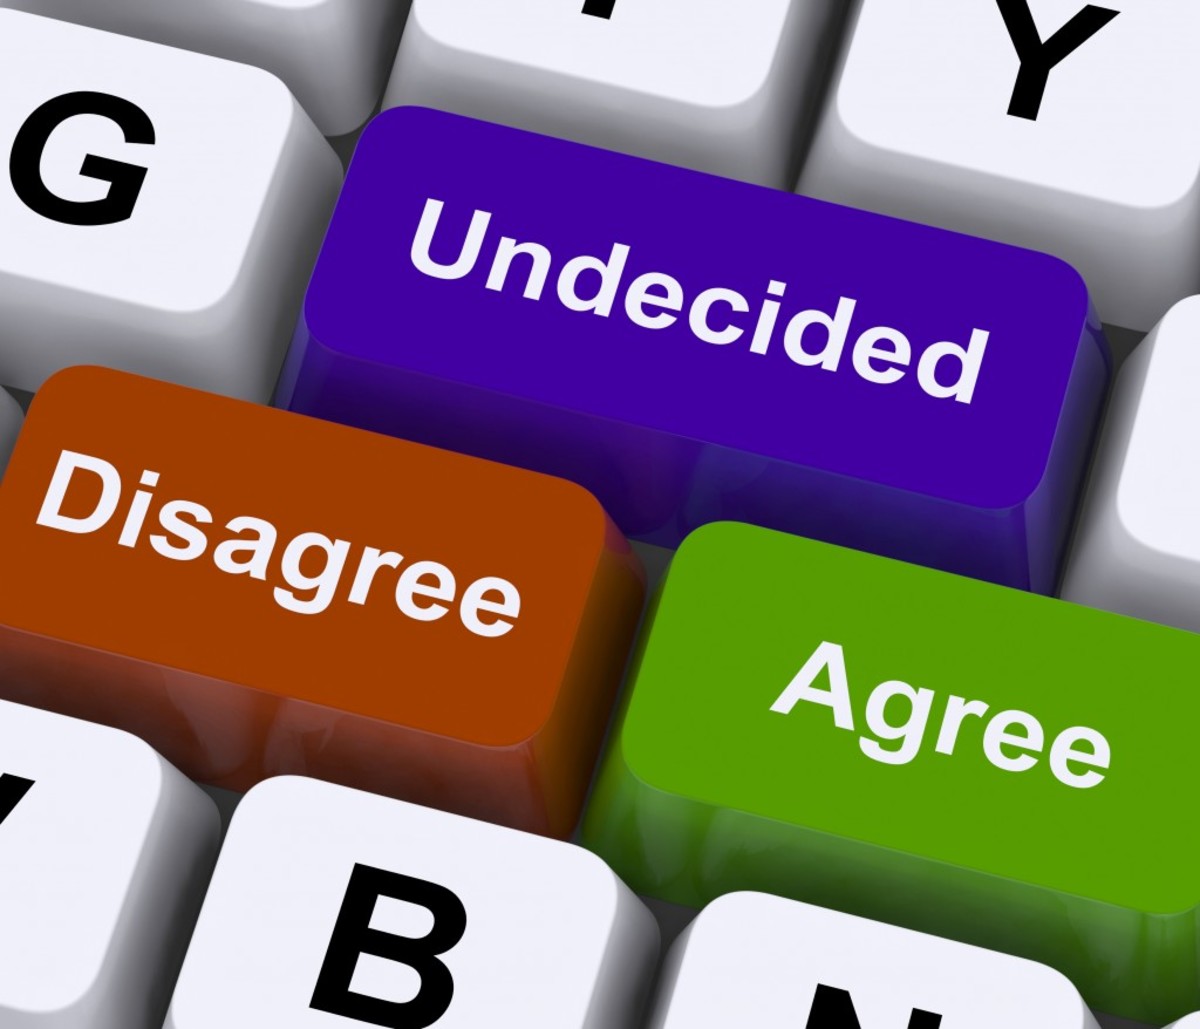 Disagree Agree Undecided Keys For Online Poll